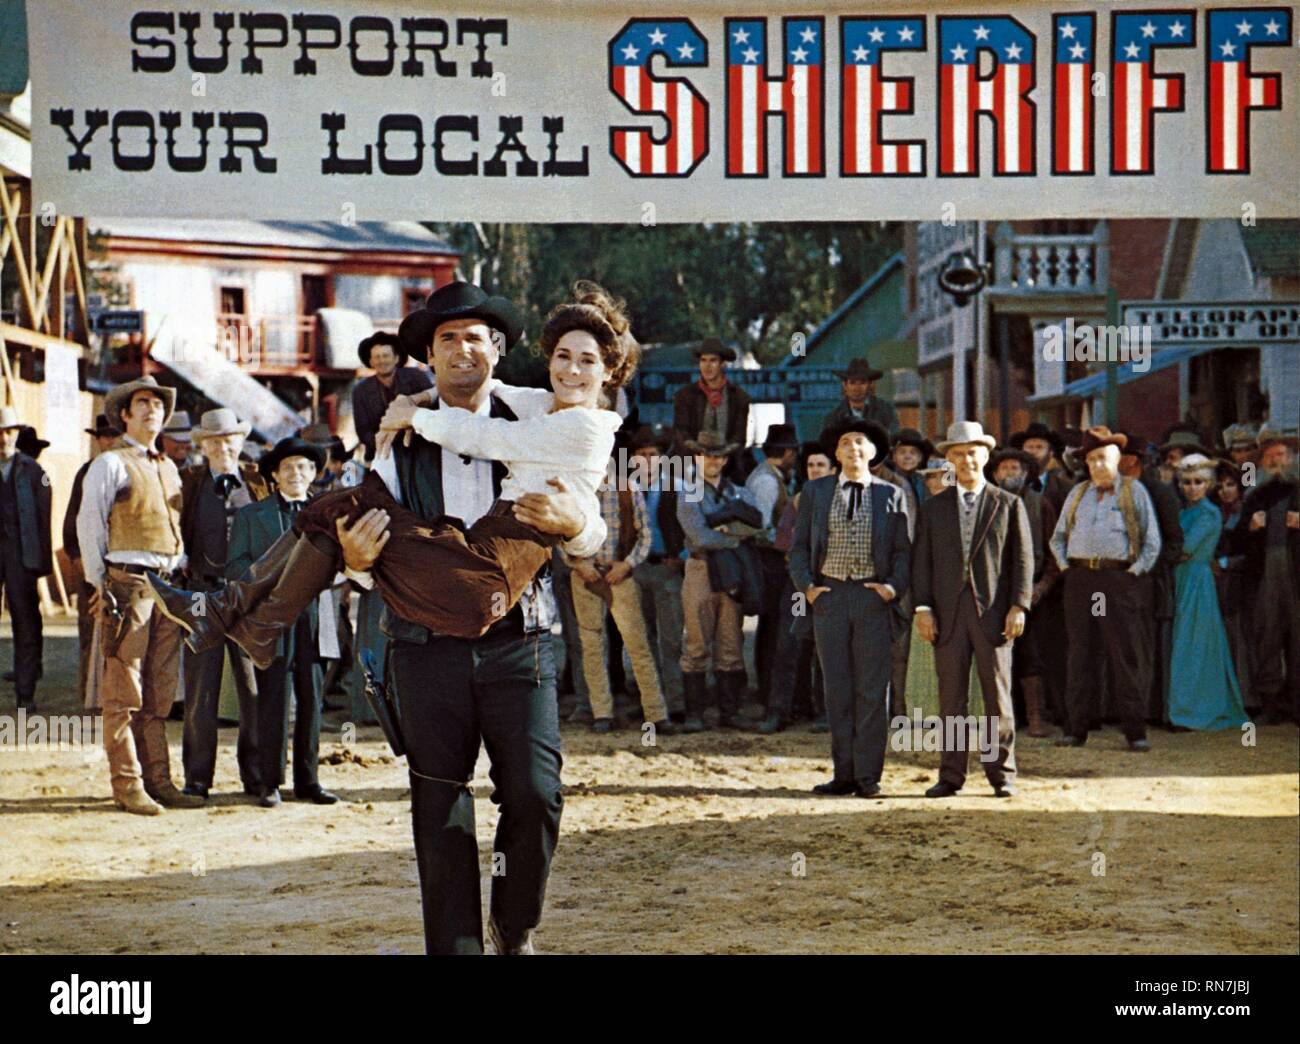 GARNER,HACKETT, SUPPORT YOUR LOCAL SHERIFF!, 1969 Stock Photo